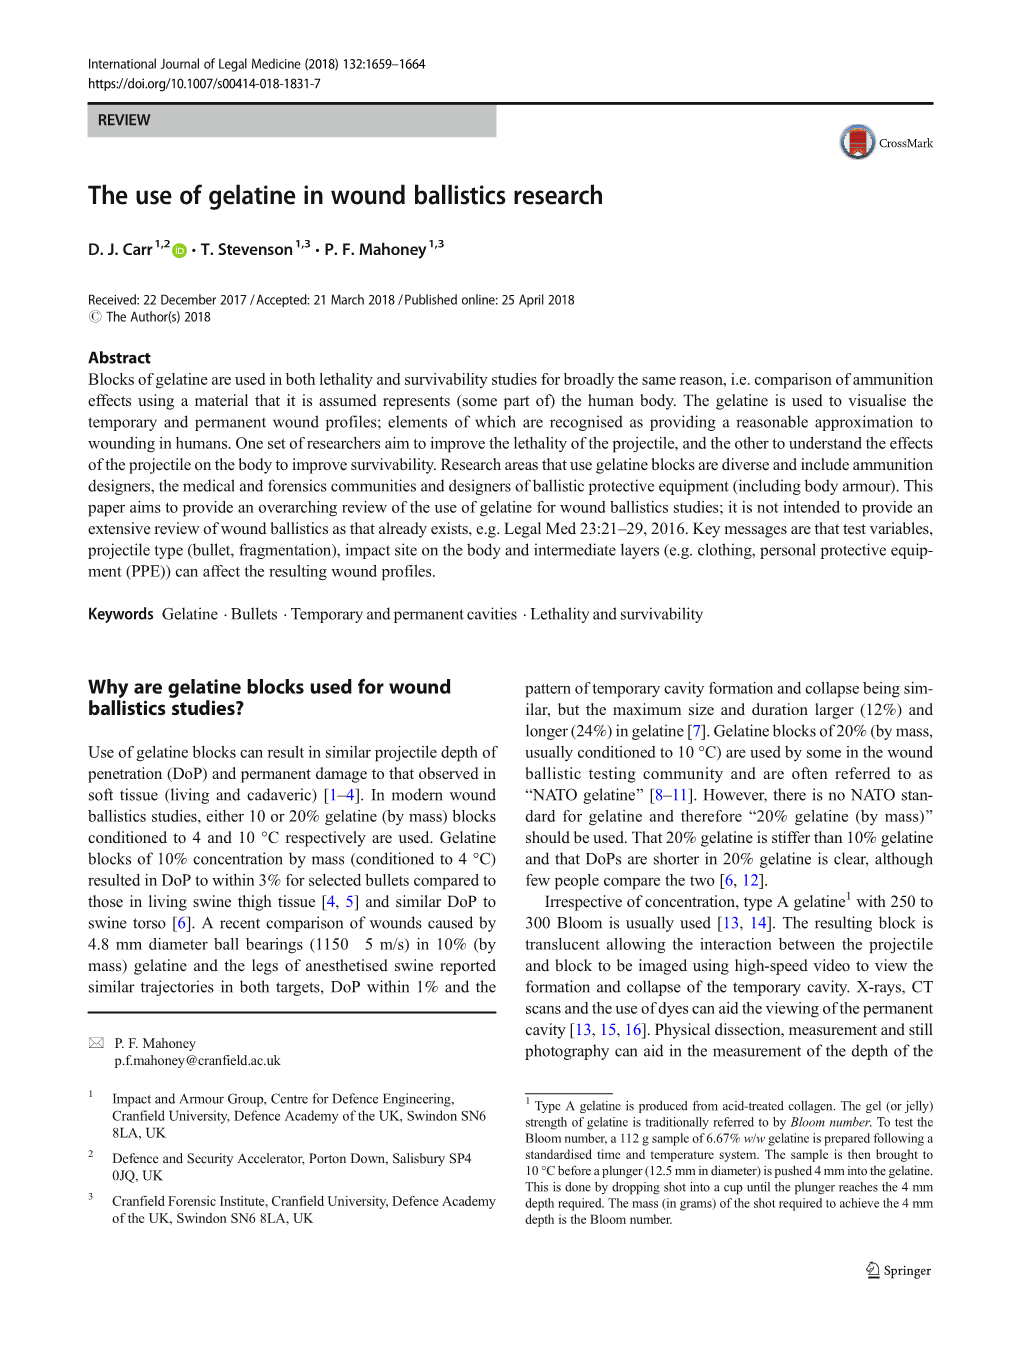 The Use of Gelatine in Wound Ballistics Research